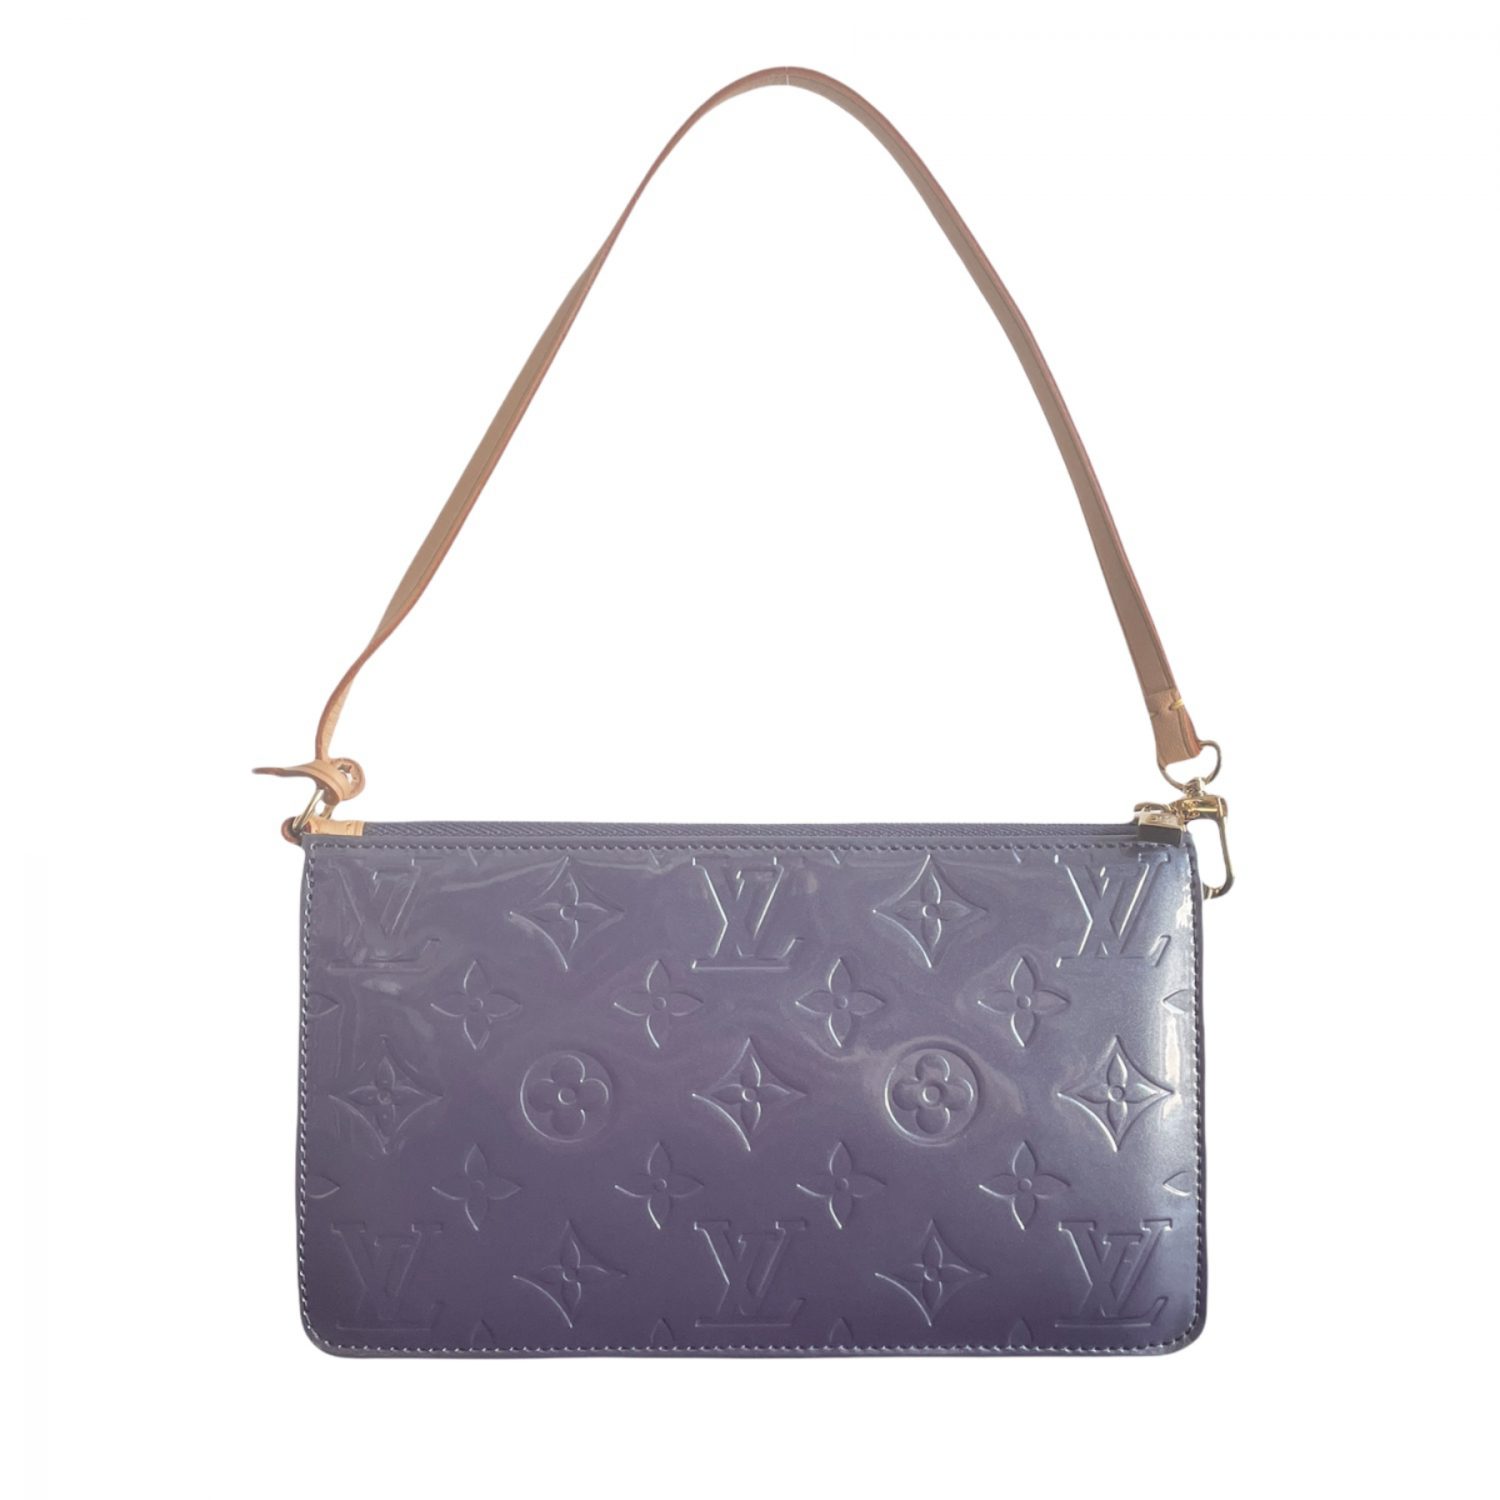 Vintage Louis Vuitton Vernis Mini Shoulder Bag in Blue/Grey | NITRYL